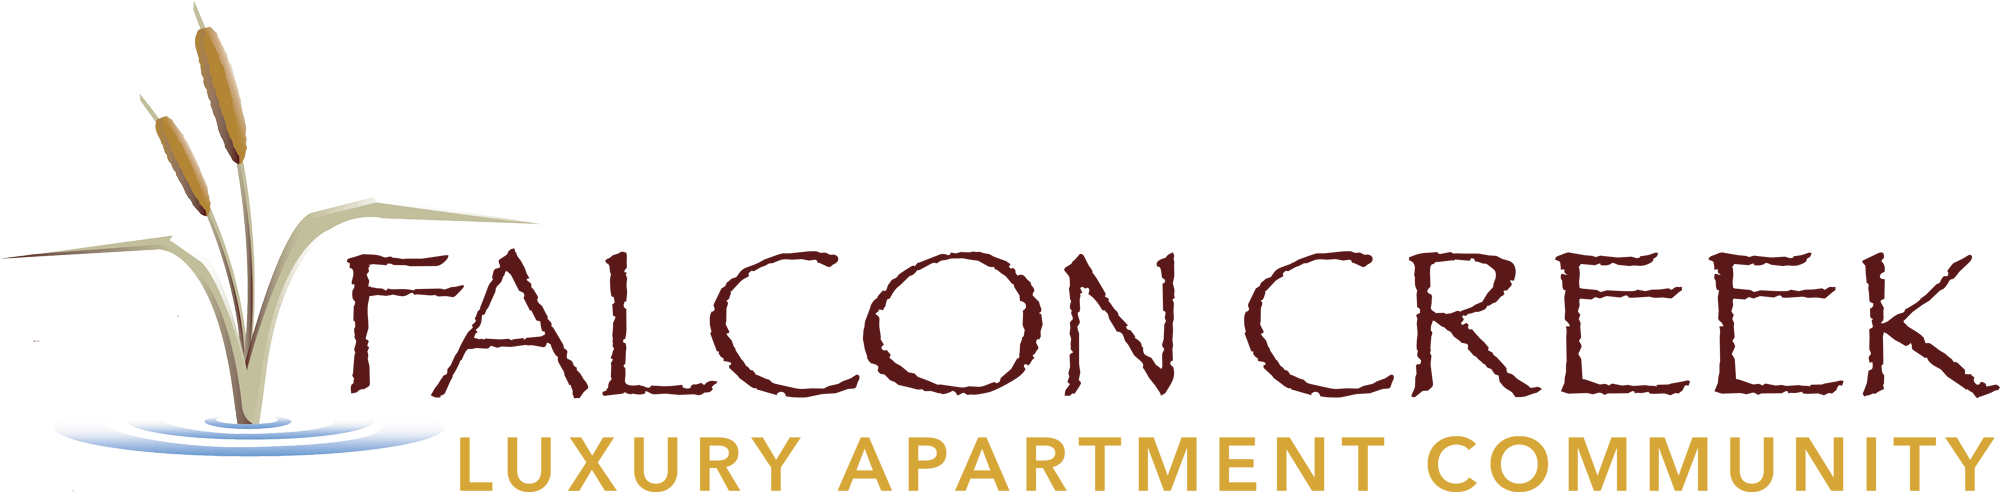 Luxury Apartment Logo - Falcon Creek Apartments in Hampton VA, 1 & 2 Bed Luxury Apartments